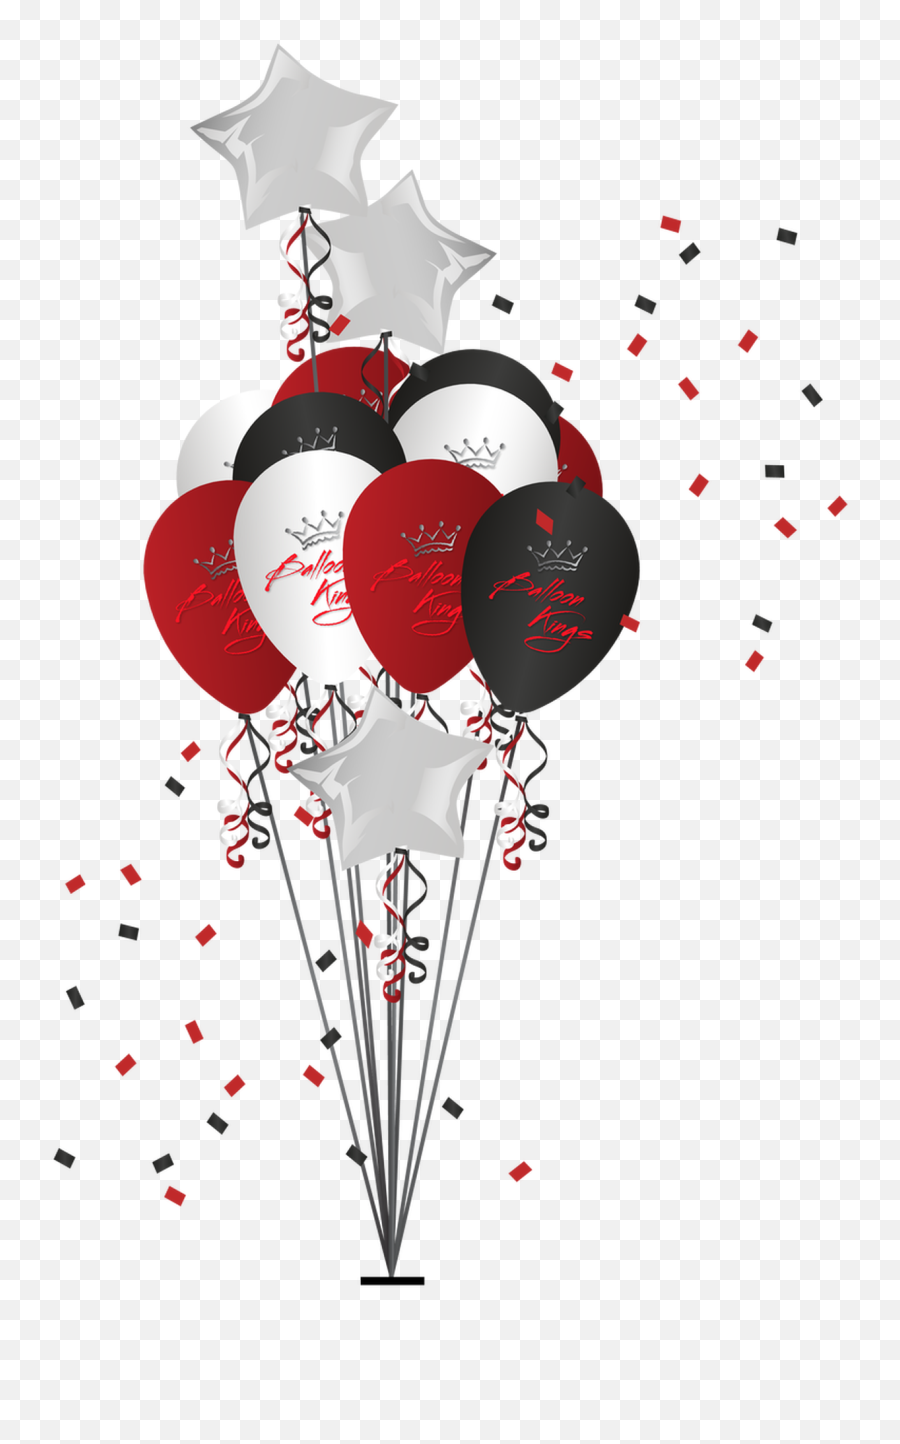 Umbrella 13 Balloons - Illustration Emoji,Number 10 And Umbrella Emoji